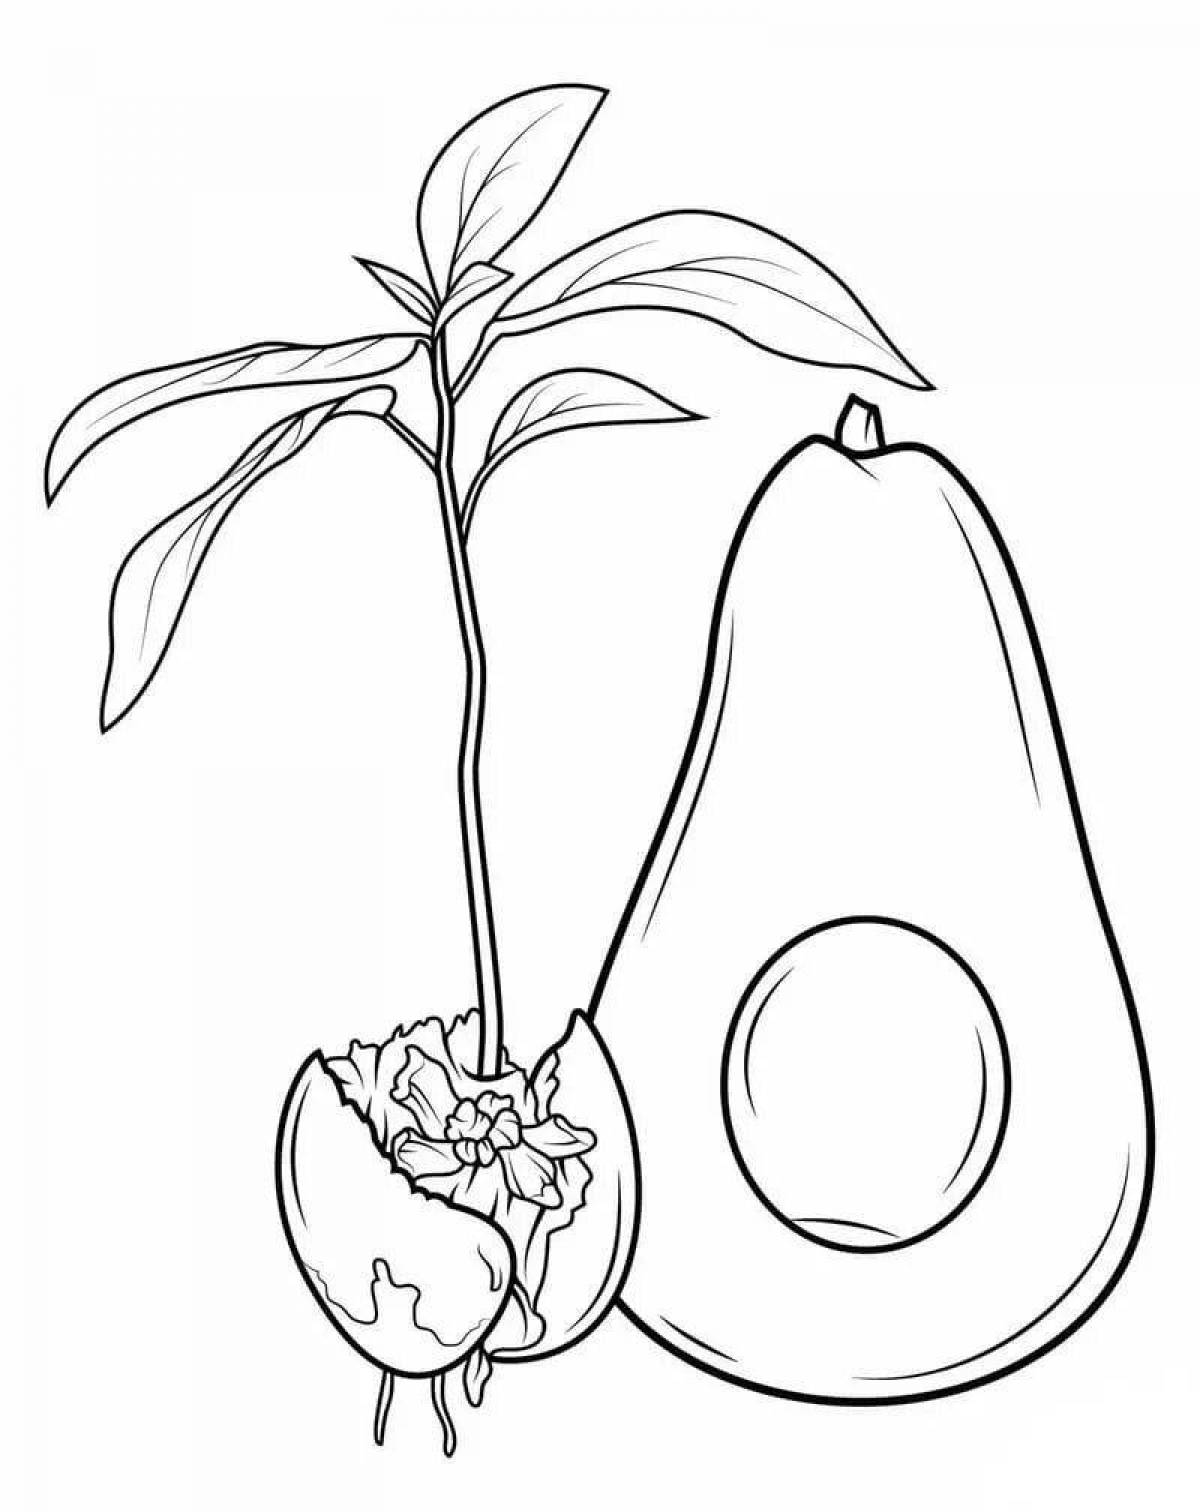 Гипнотический рисунок авокадо